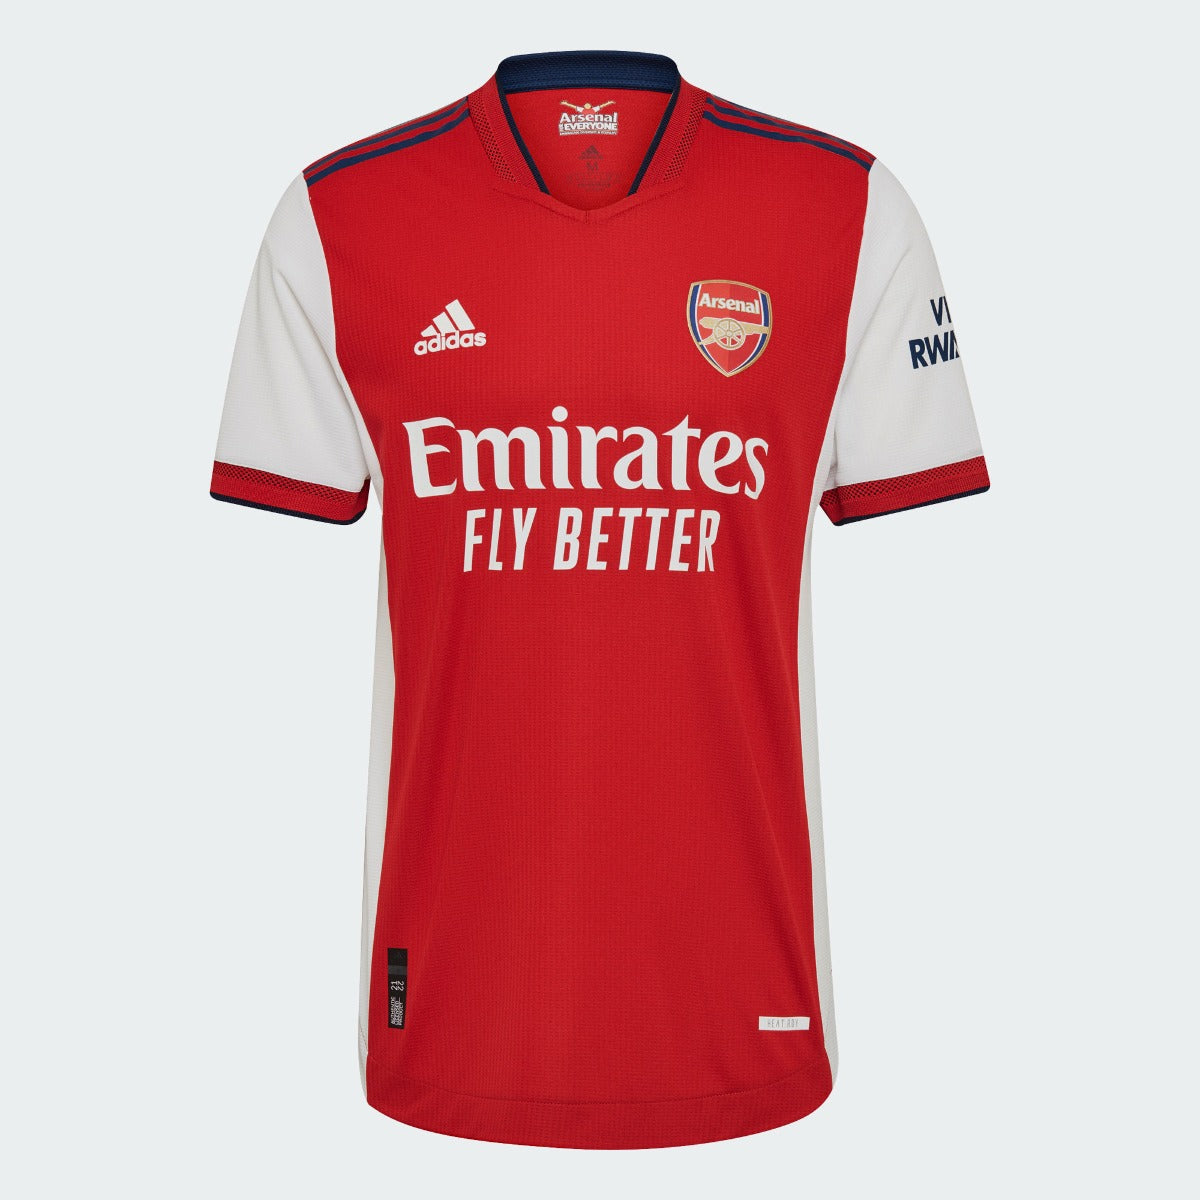 Adidas, Maglia autentica Adidas 2021-22 Arsenal - Scarlet-White